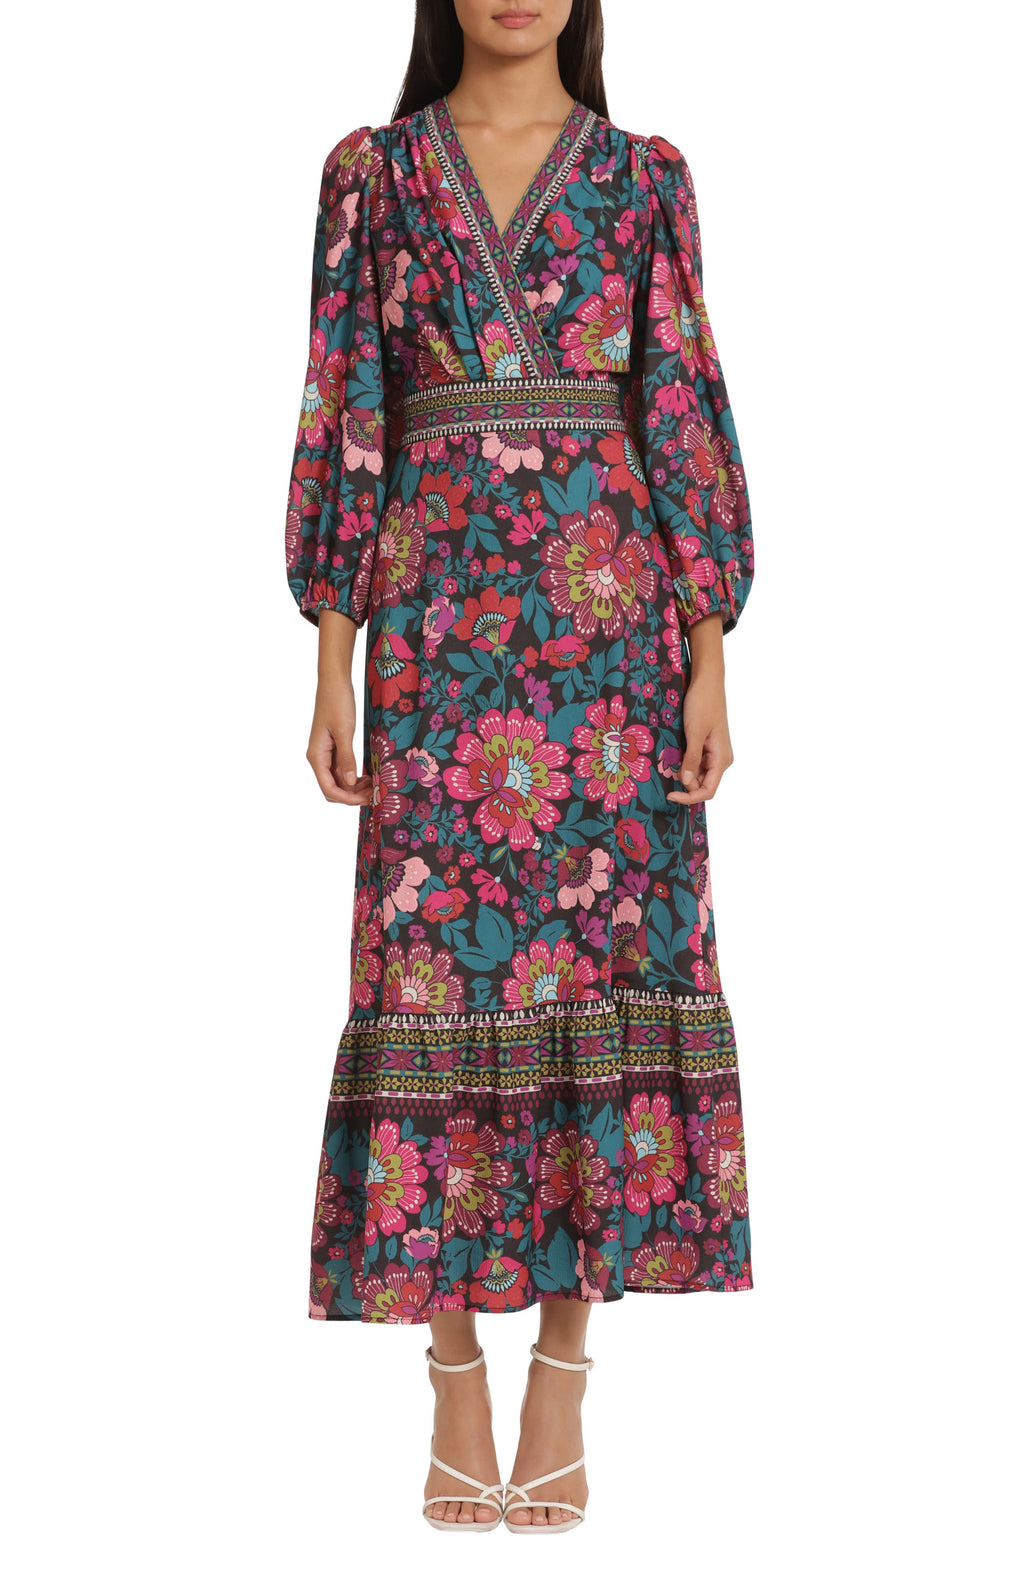 DONNA MORGAN FOR MAGGY Floral Border Print Maxi Dress, Main, color, BLACK/ RASPBERRY